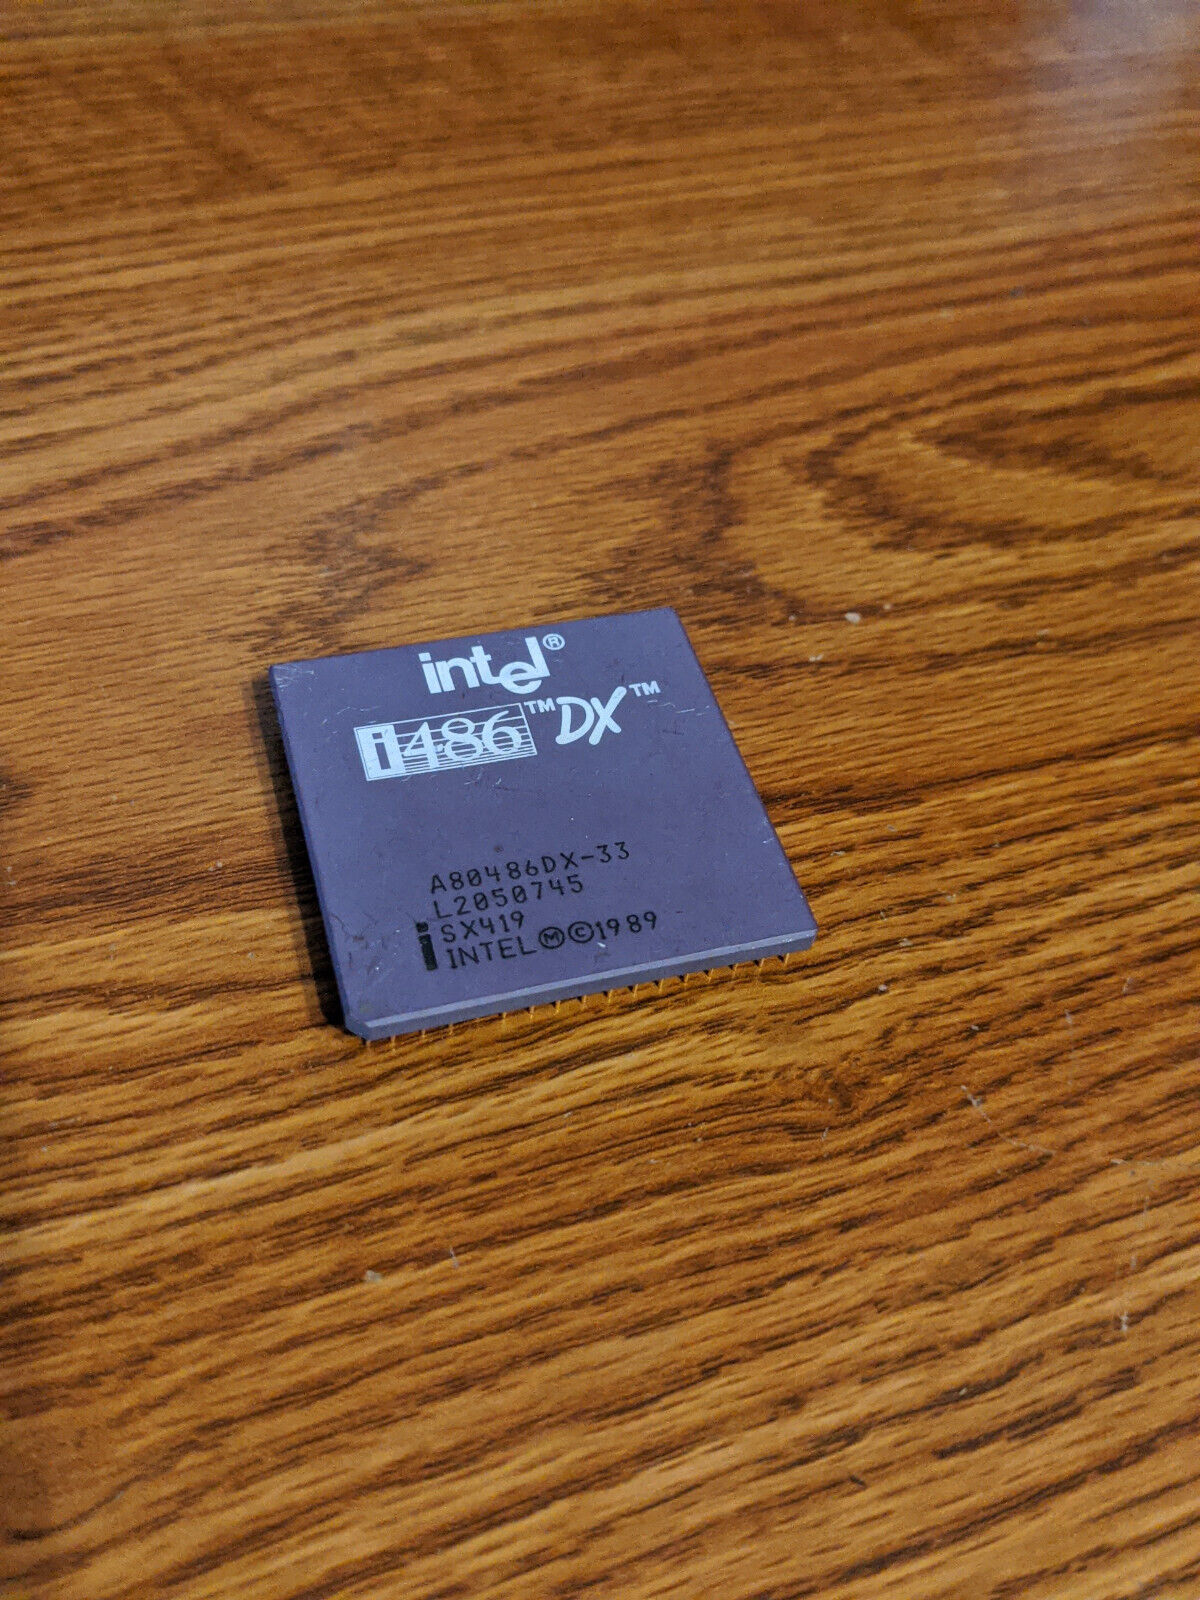 Intel i486 DX 33MHz Processor A80486DX-33 SX419